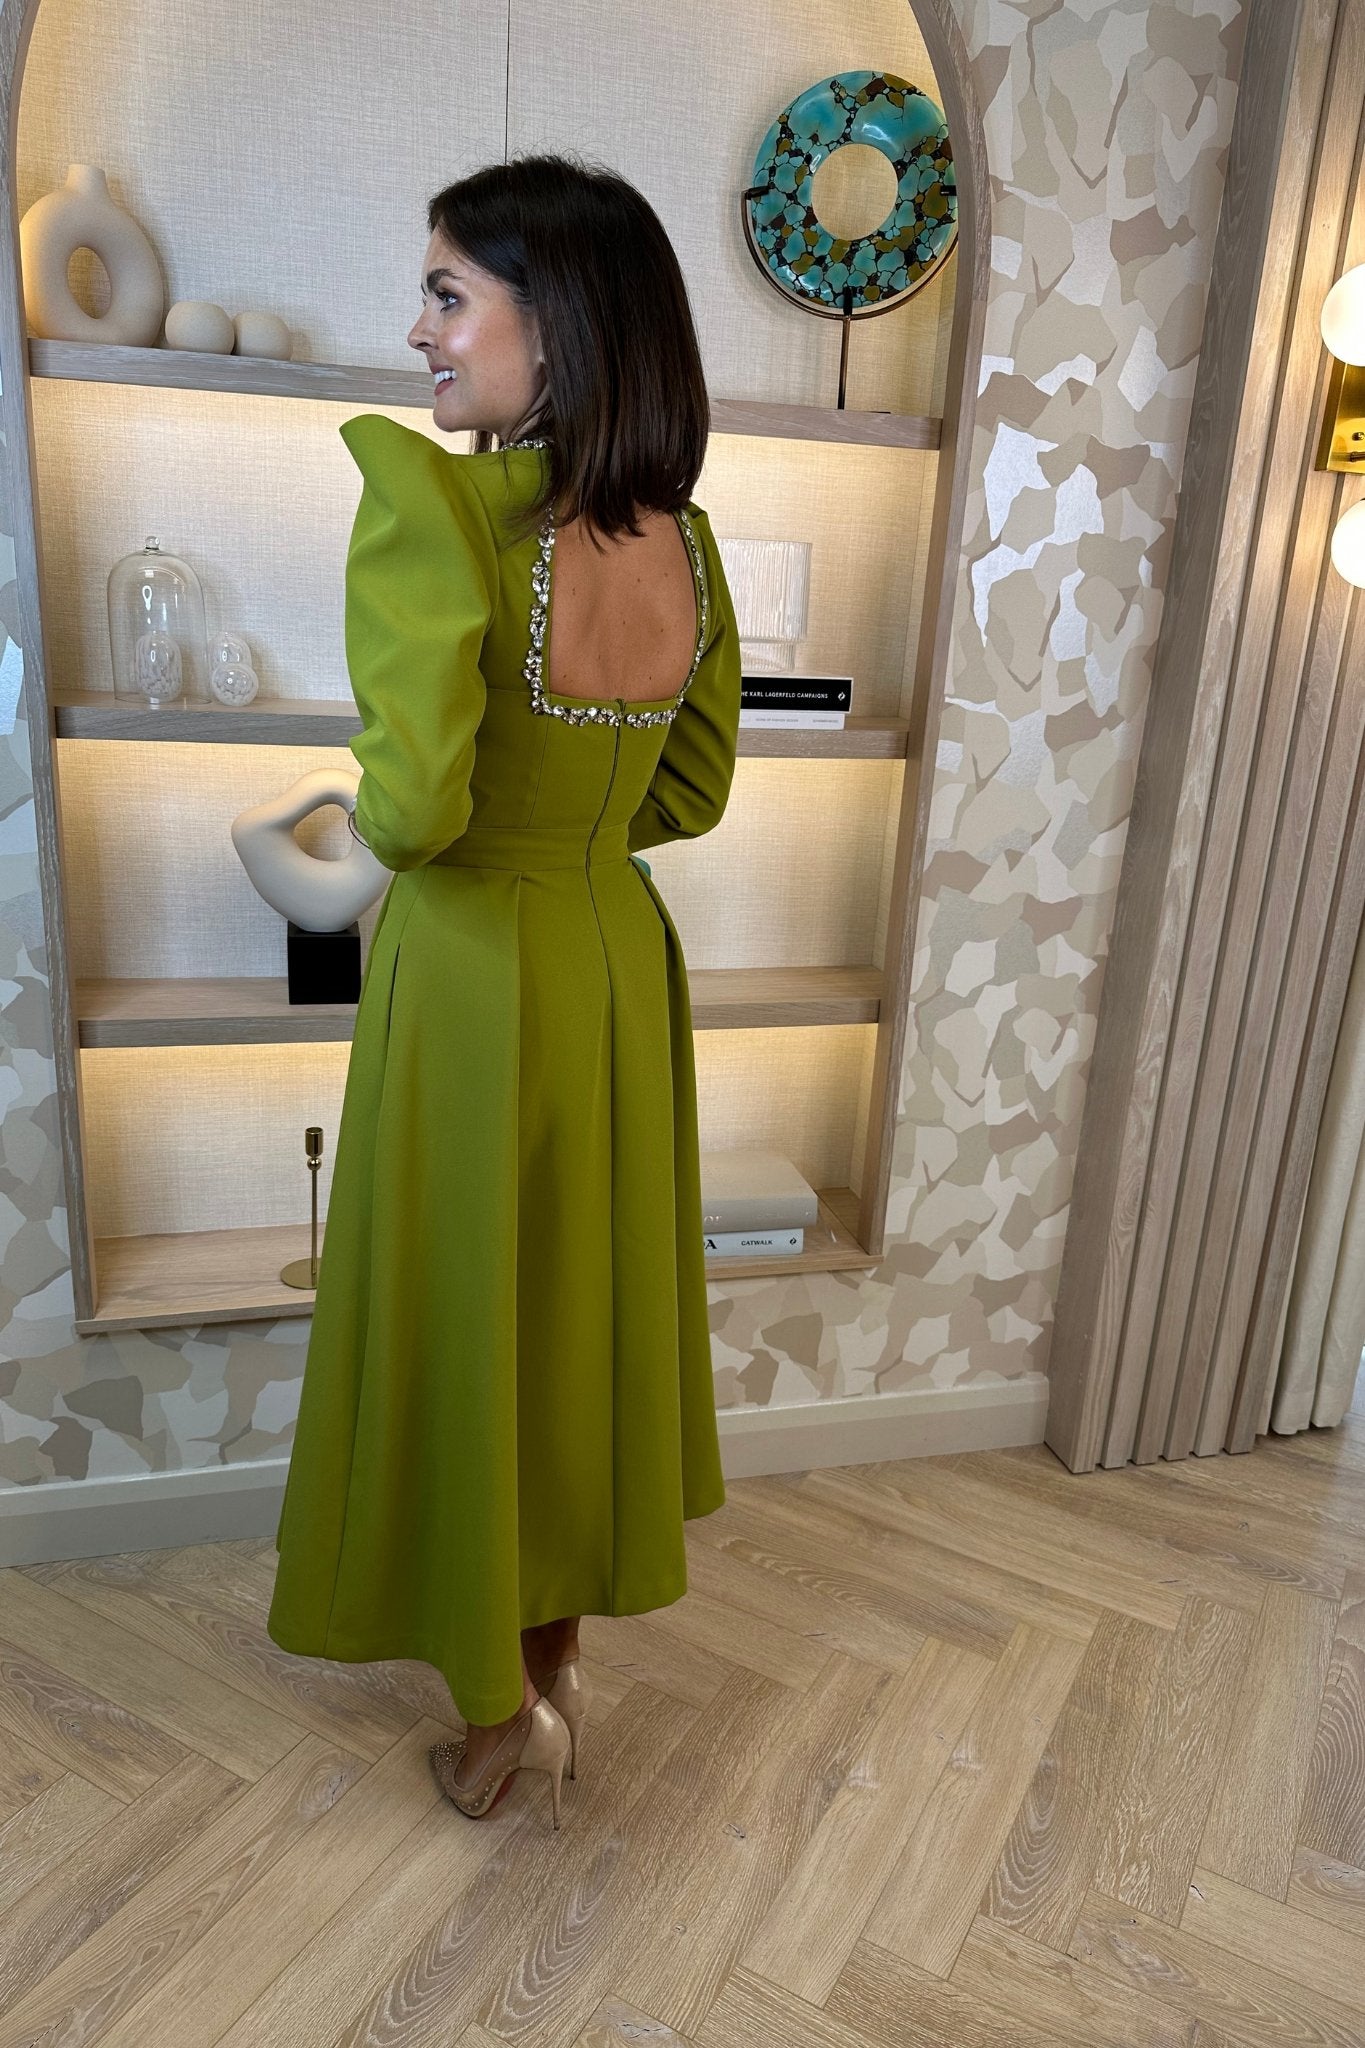 Eva Embellished Detail Dress In Olive Green - The Walk in Wardrobe